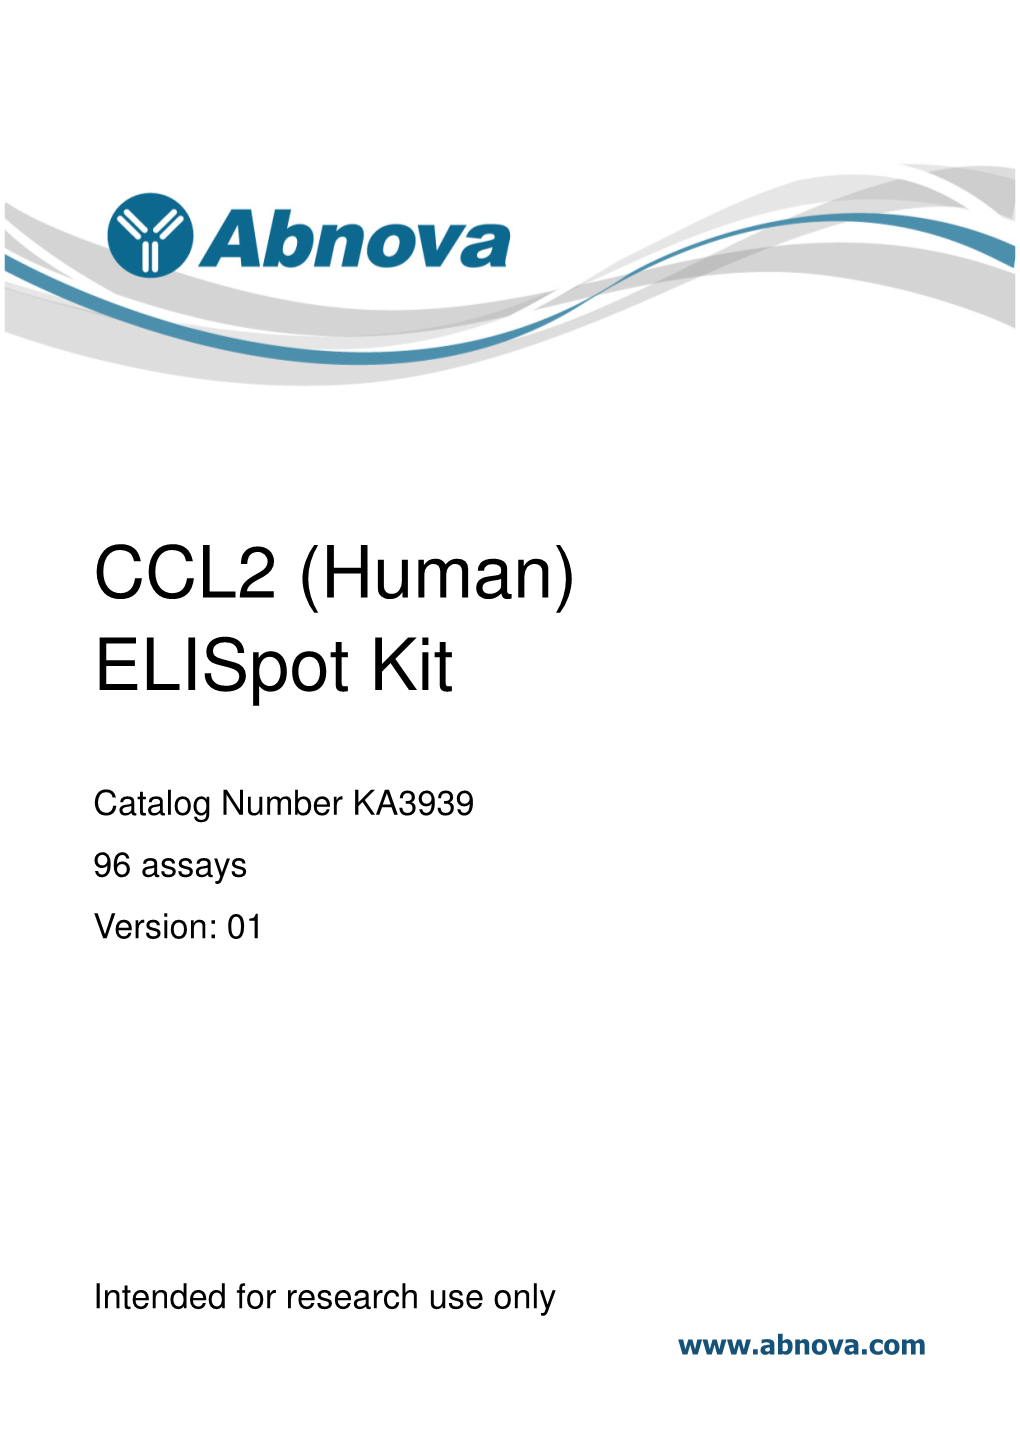 CCL2 (Human) Elispot Kit